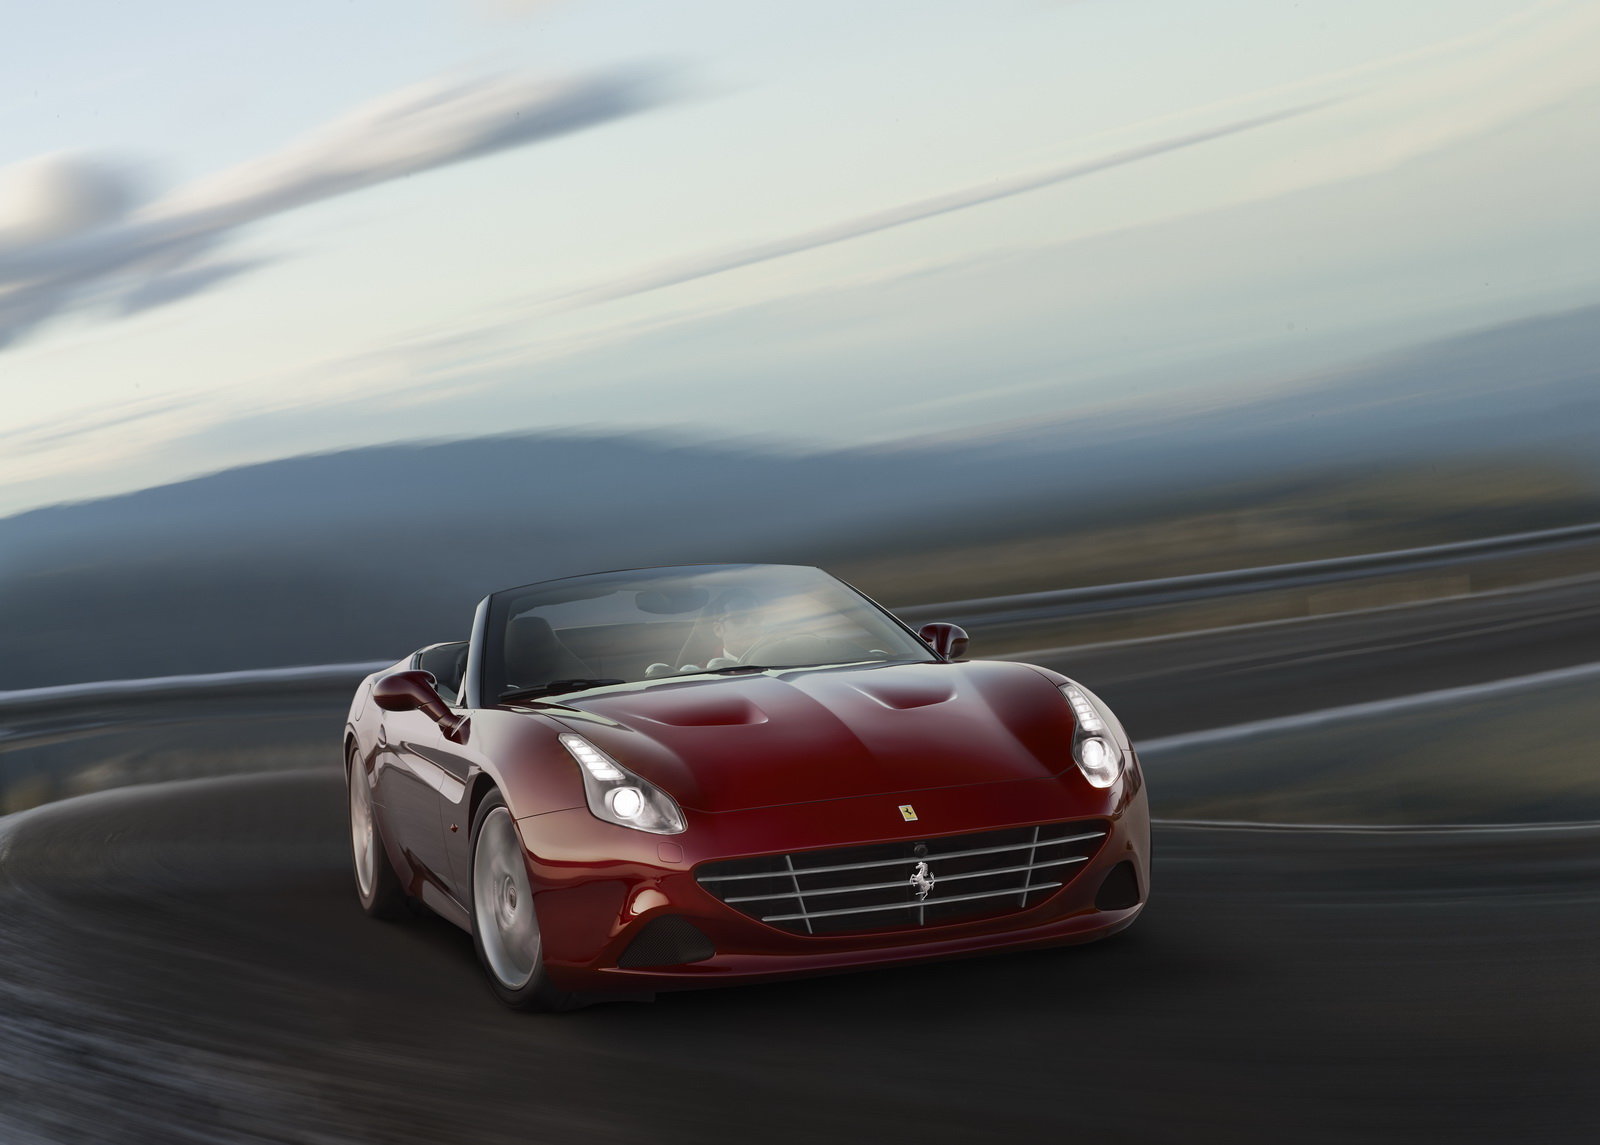 Ferrari California T se nově chlubí balíčkem Handling Speciale.